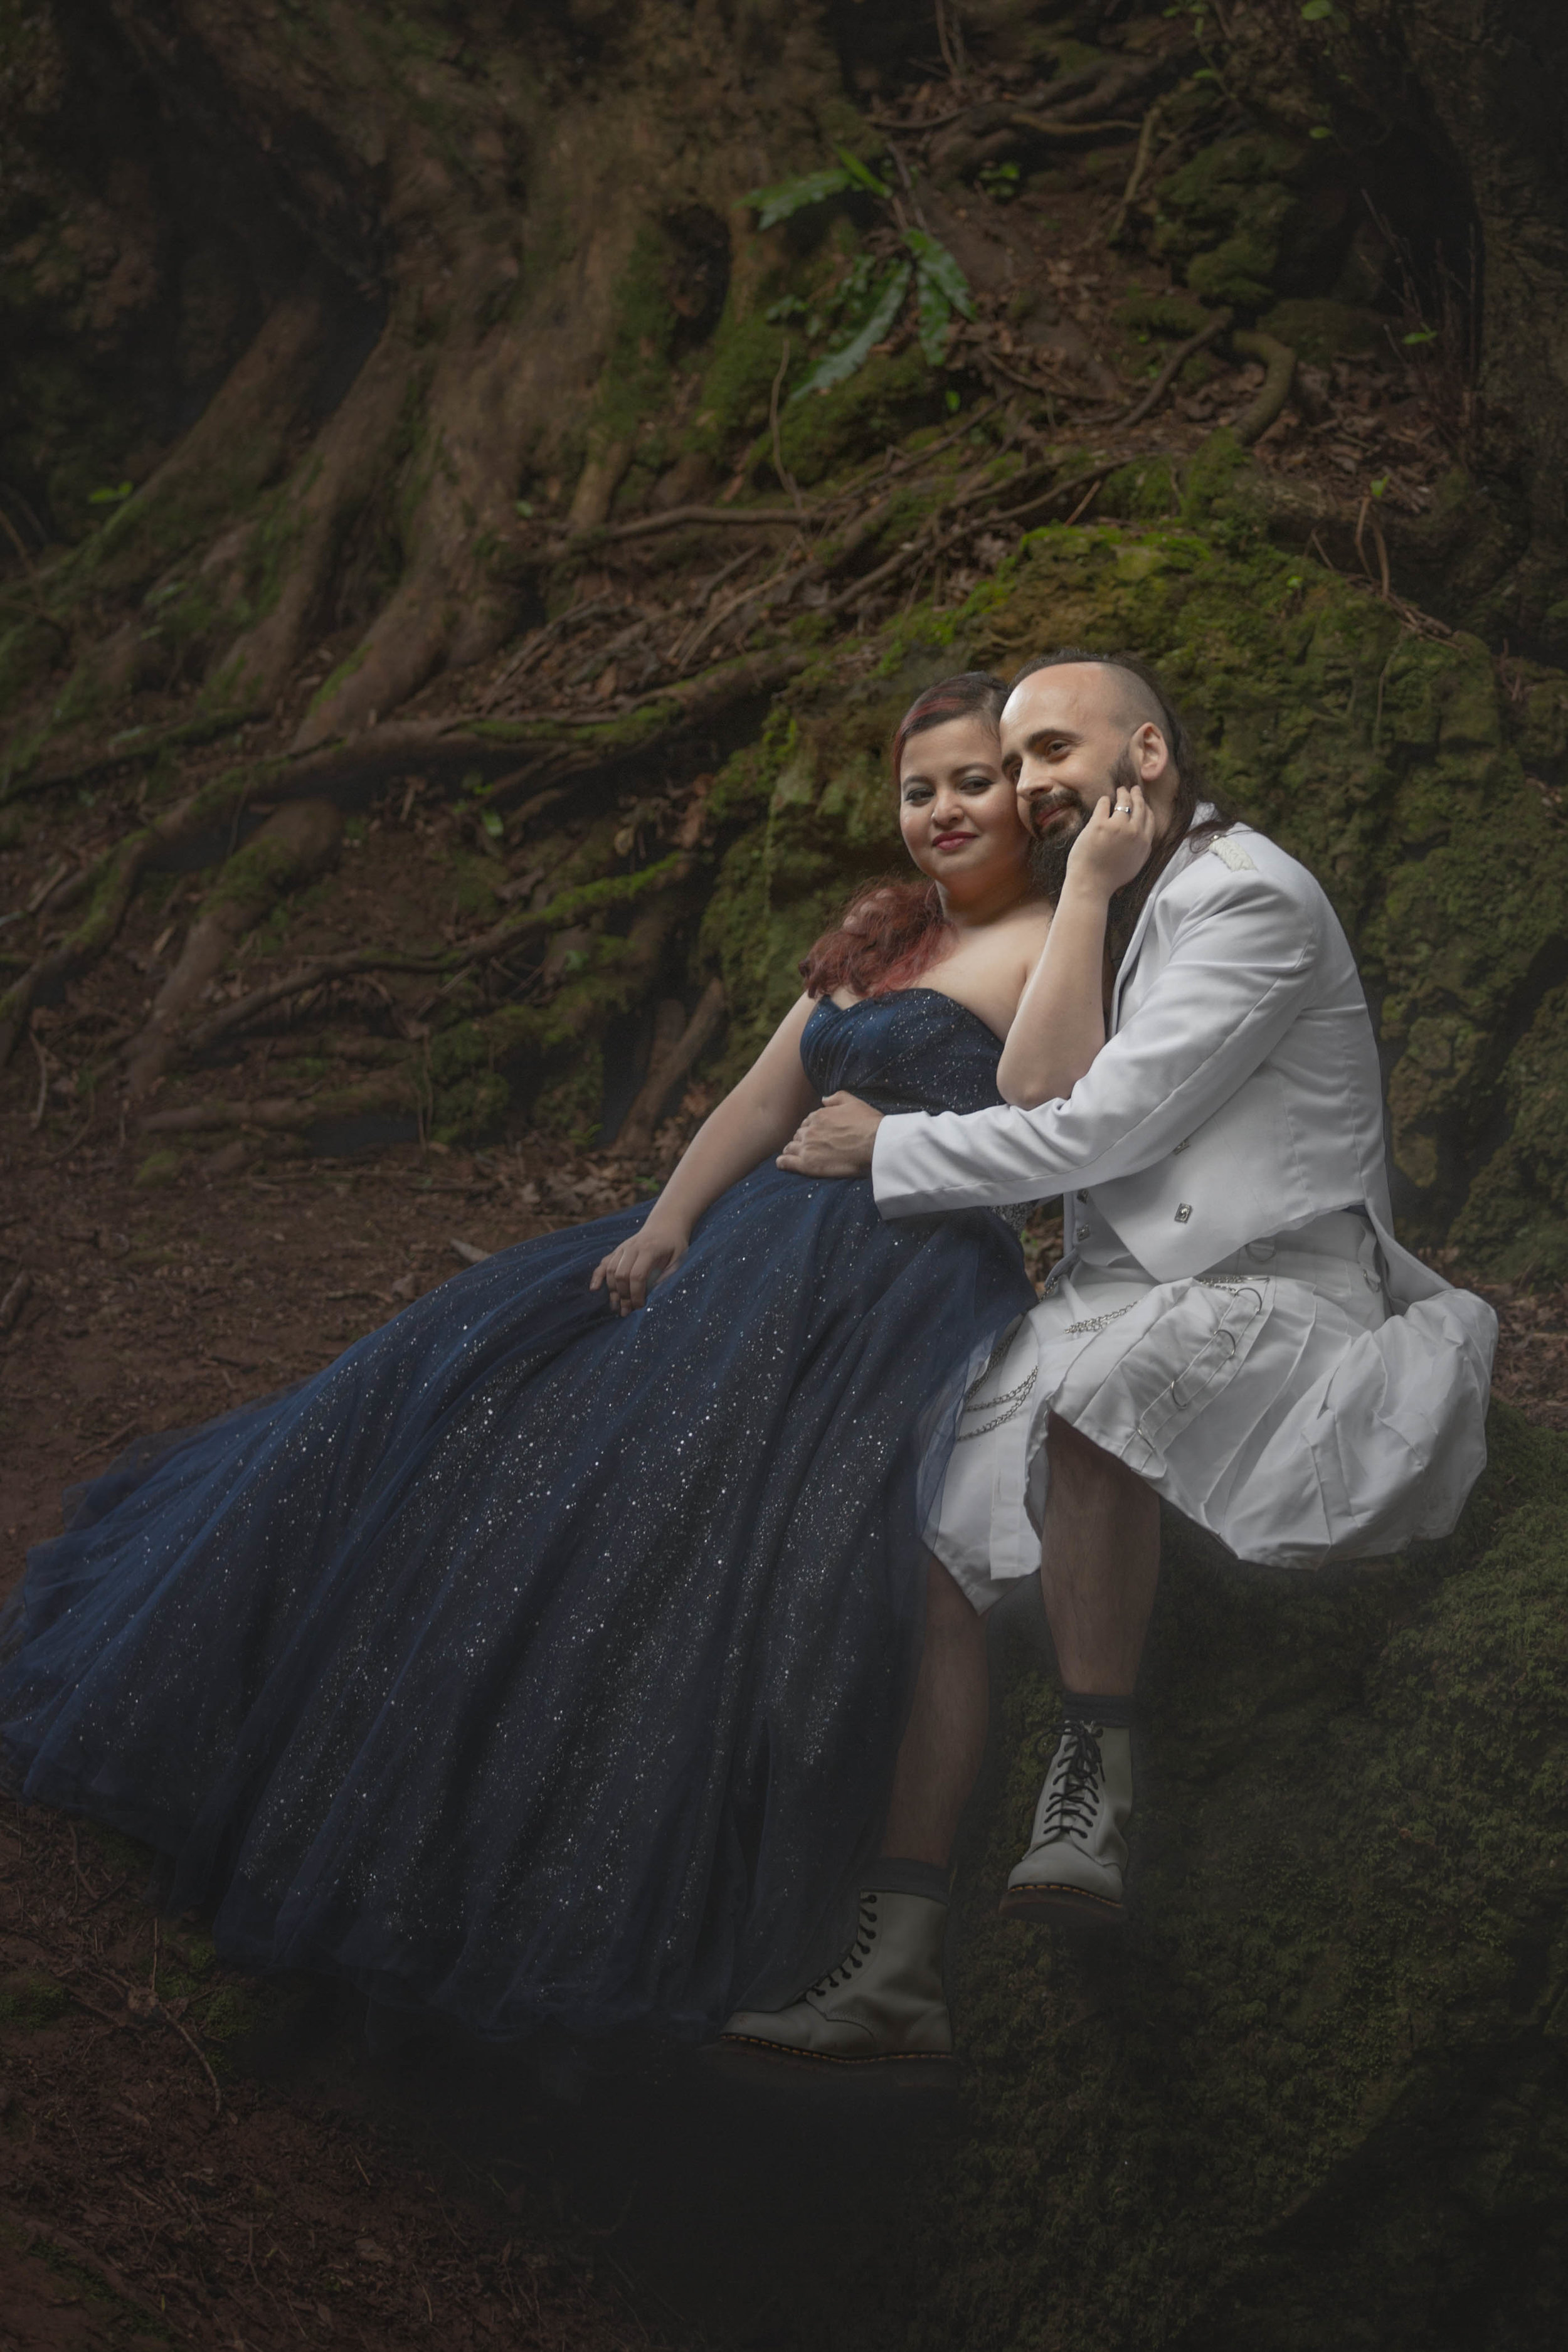 Puzzlewood-fairytale-fairy-forest-wood-prewedding-photoshoot-star-wars-couple-shoot-asian-wedding-photographer-natalia-smith-photography-9.jpg